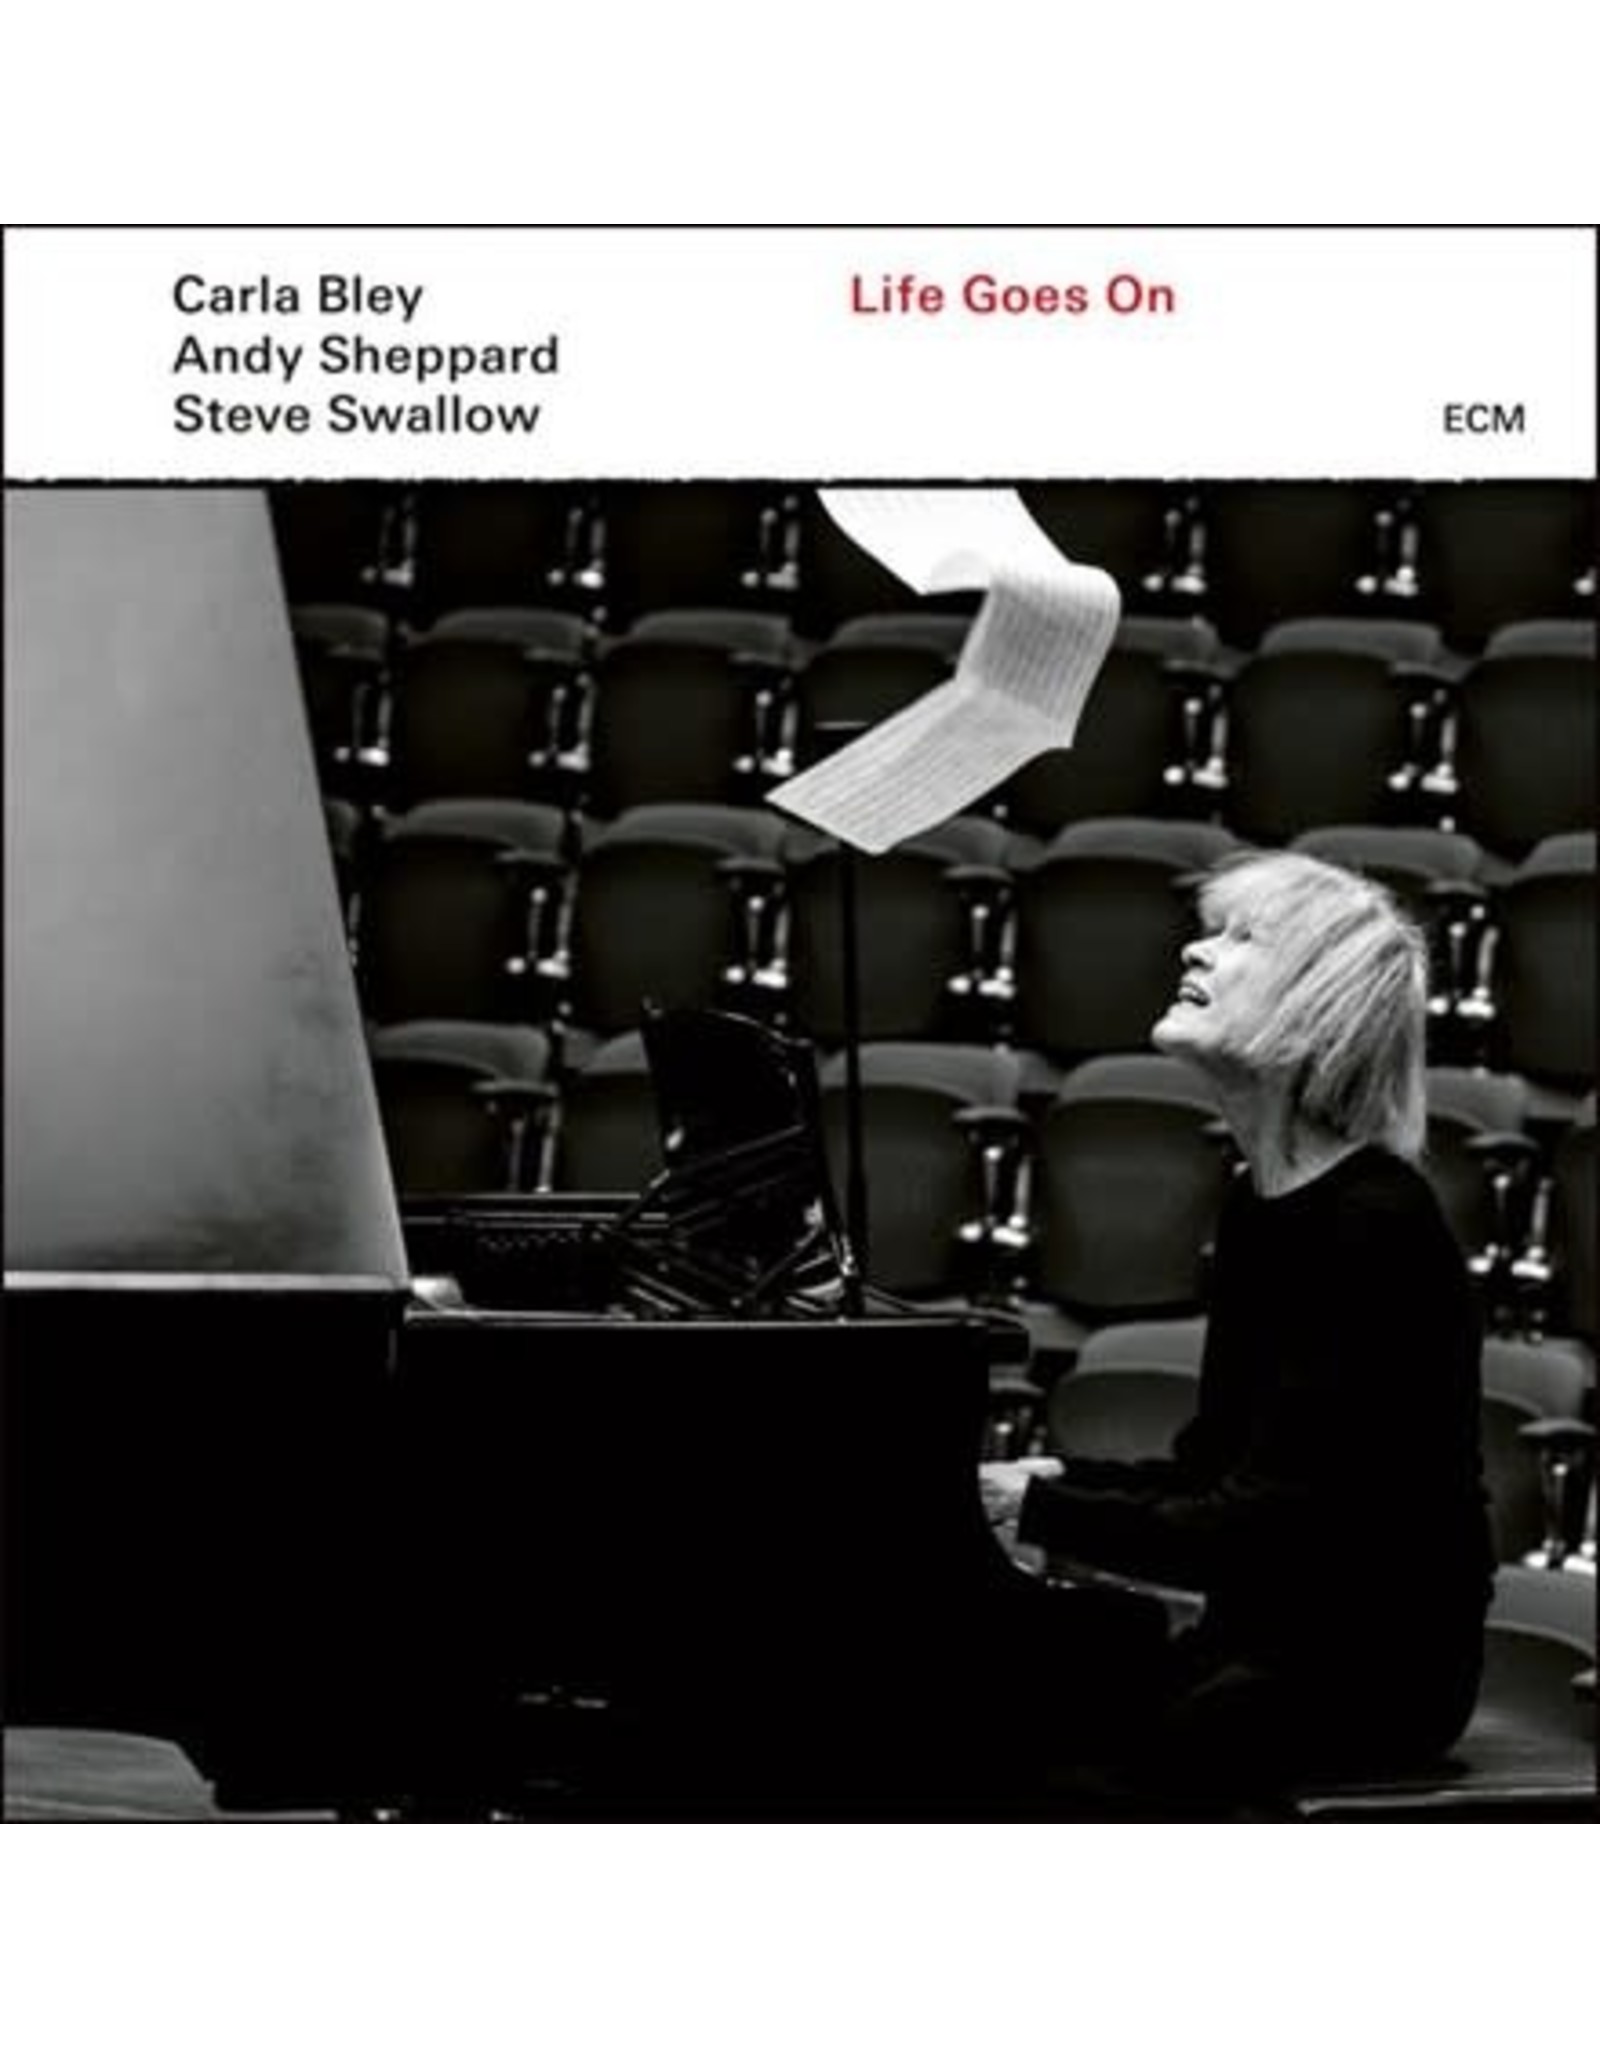 ECM Bley, Carla, Steve Swallow & Andy Sheppard: Life Goes On LP